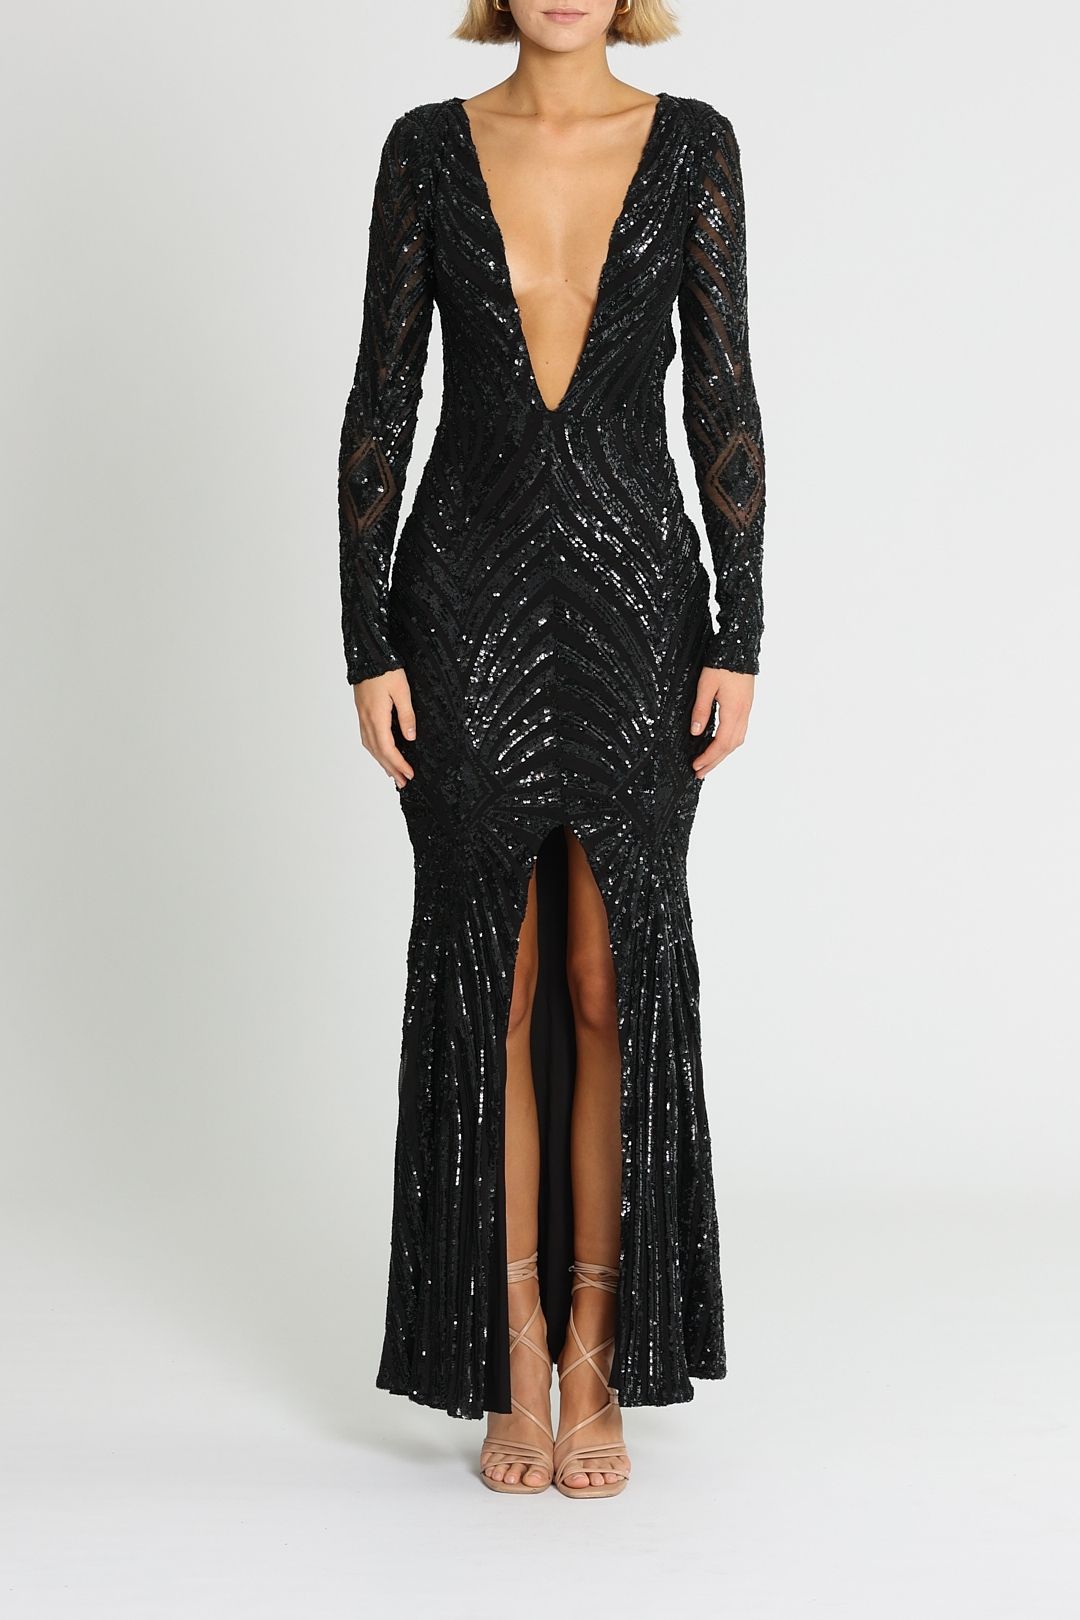 Ae'lkemi Art Deco Sequin Gown Black 